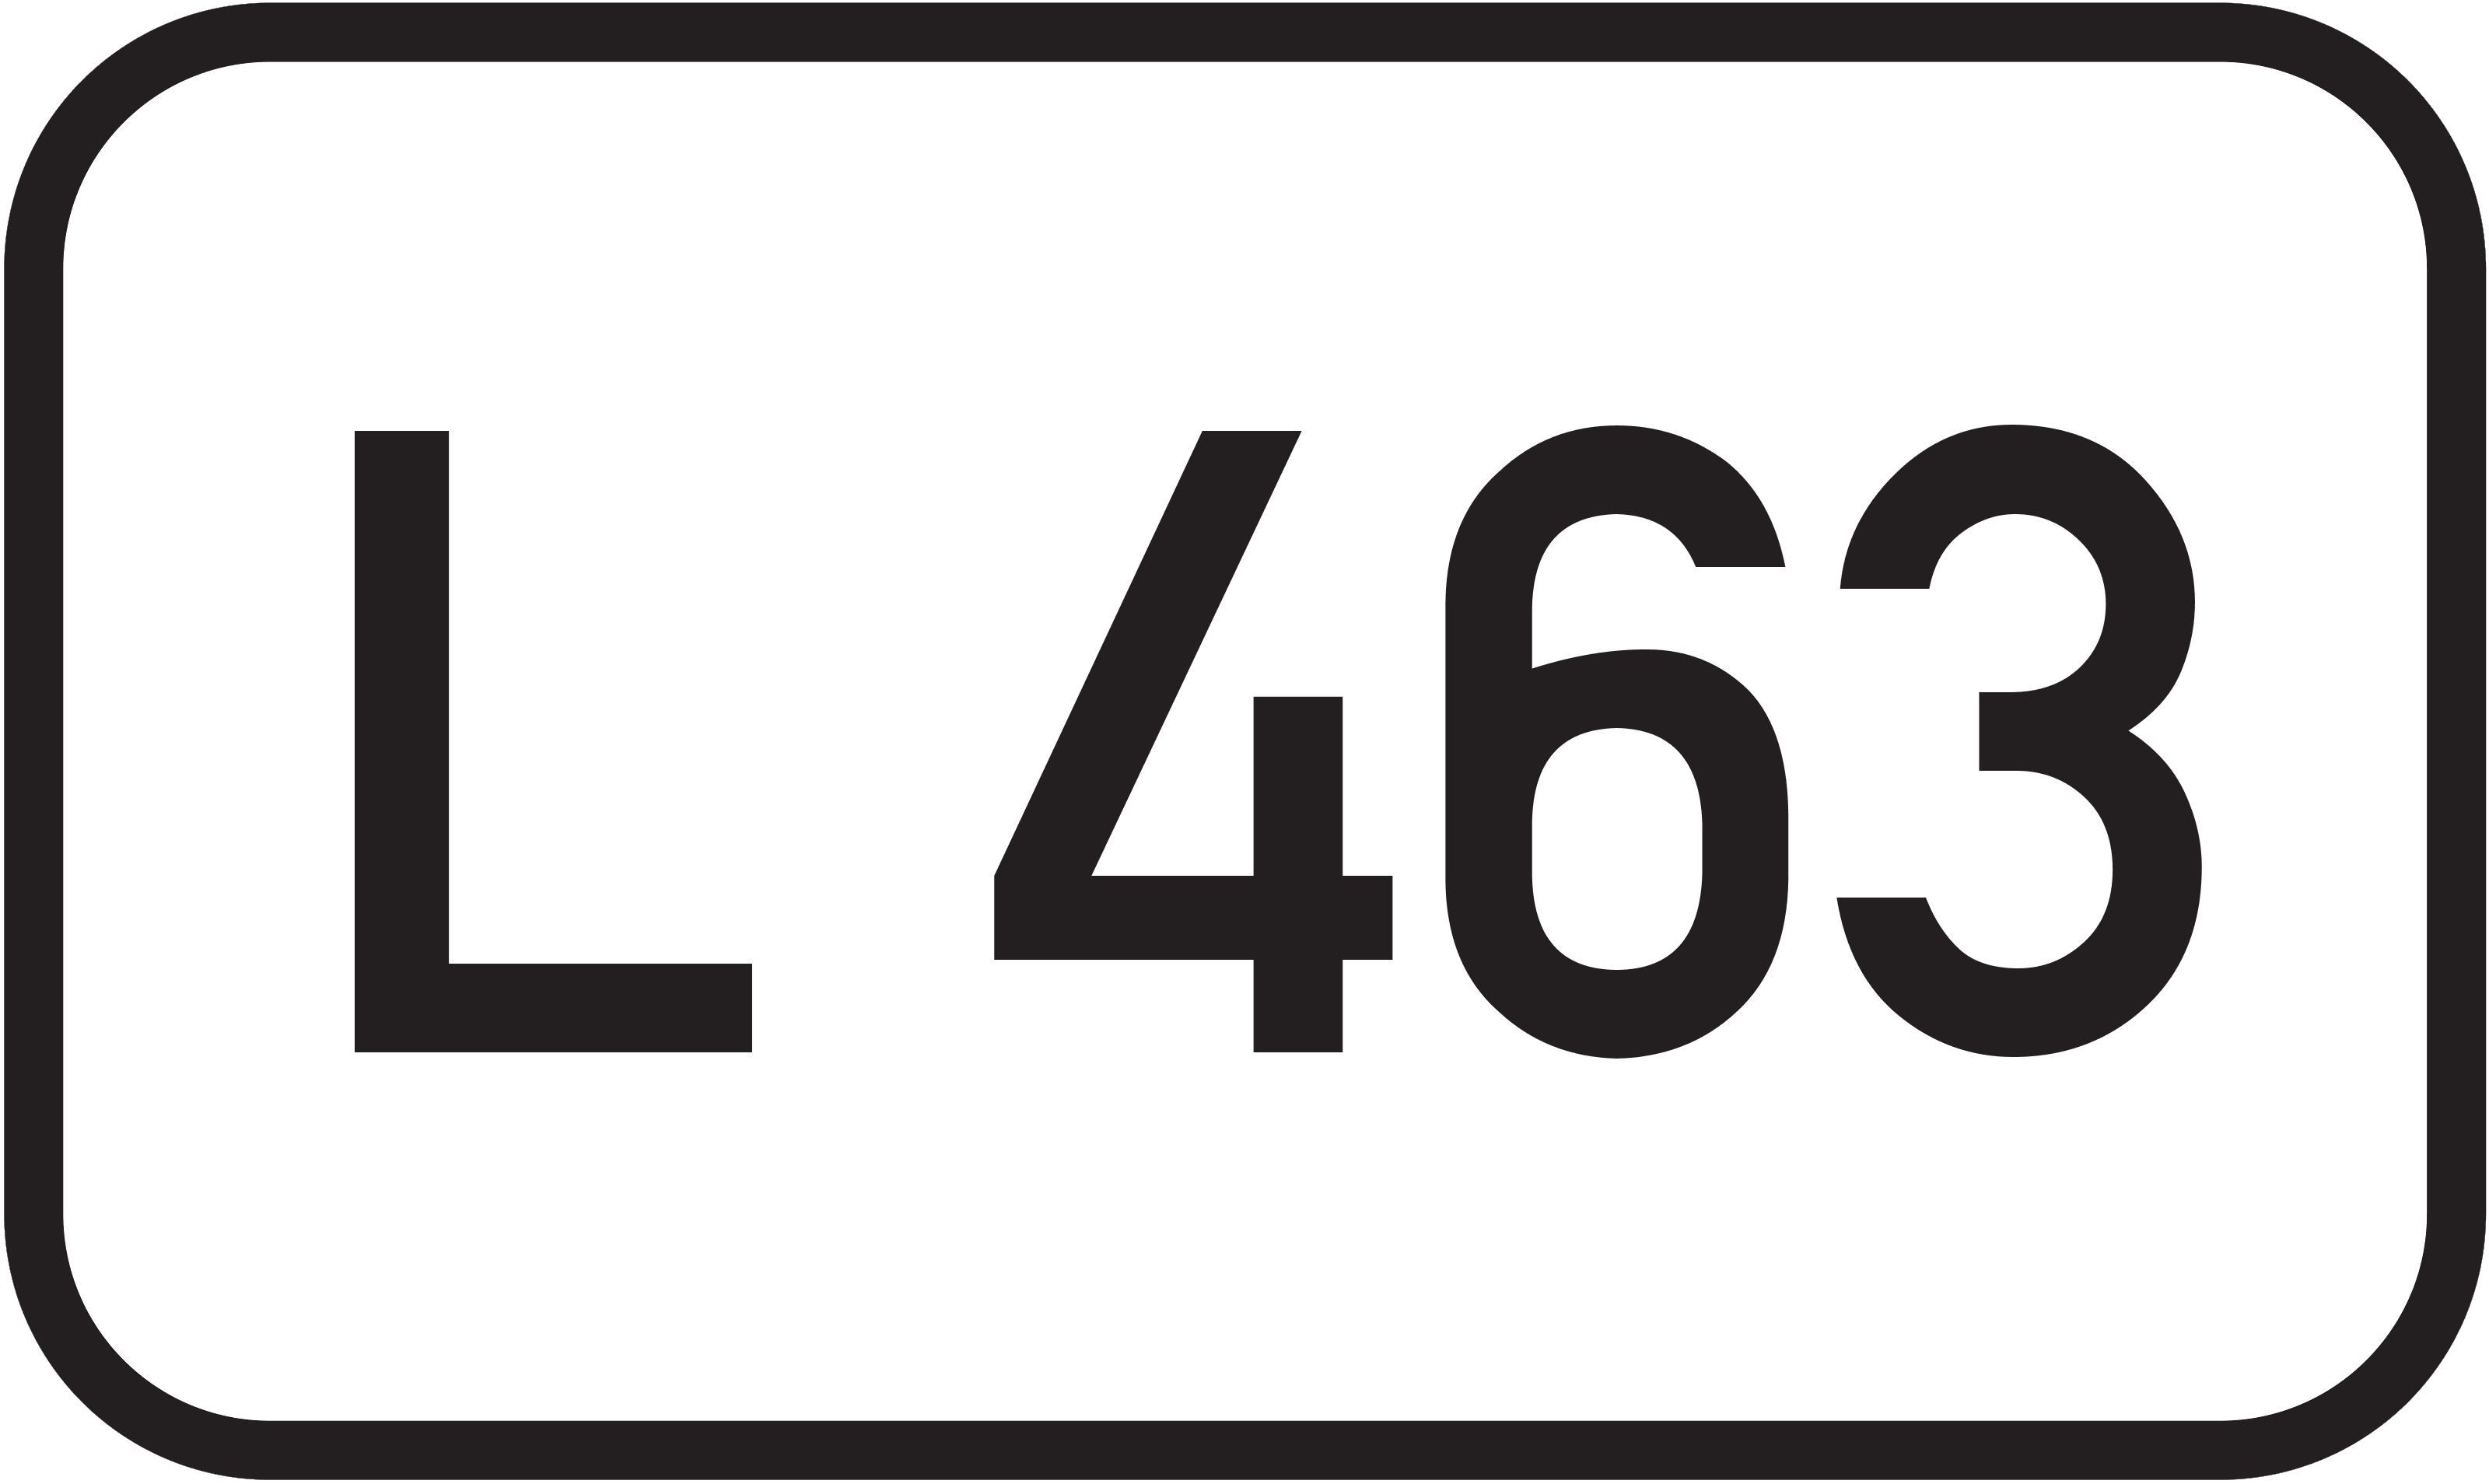 Straßenschild Landesstraße L 463